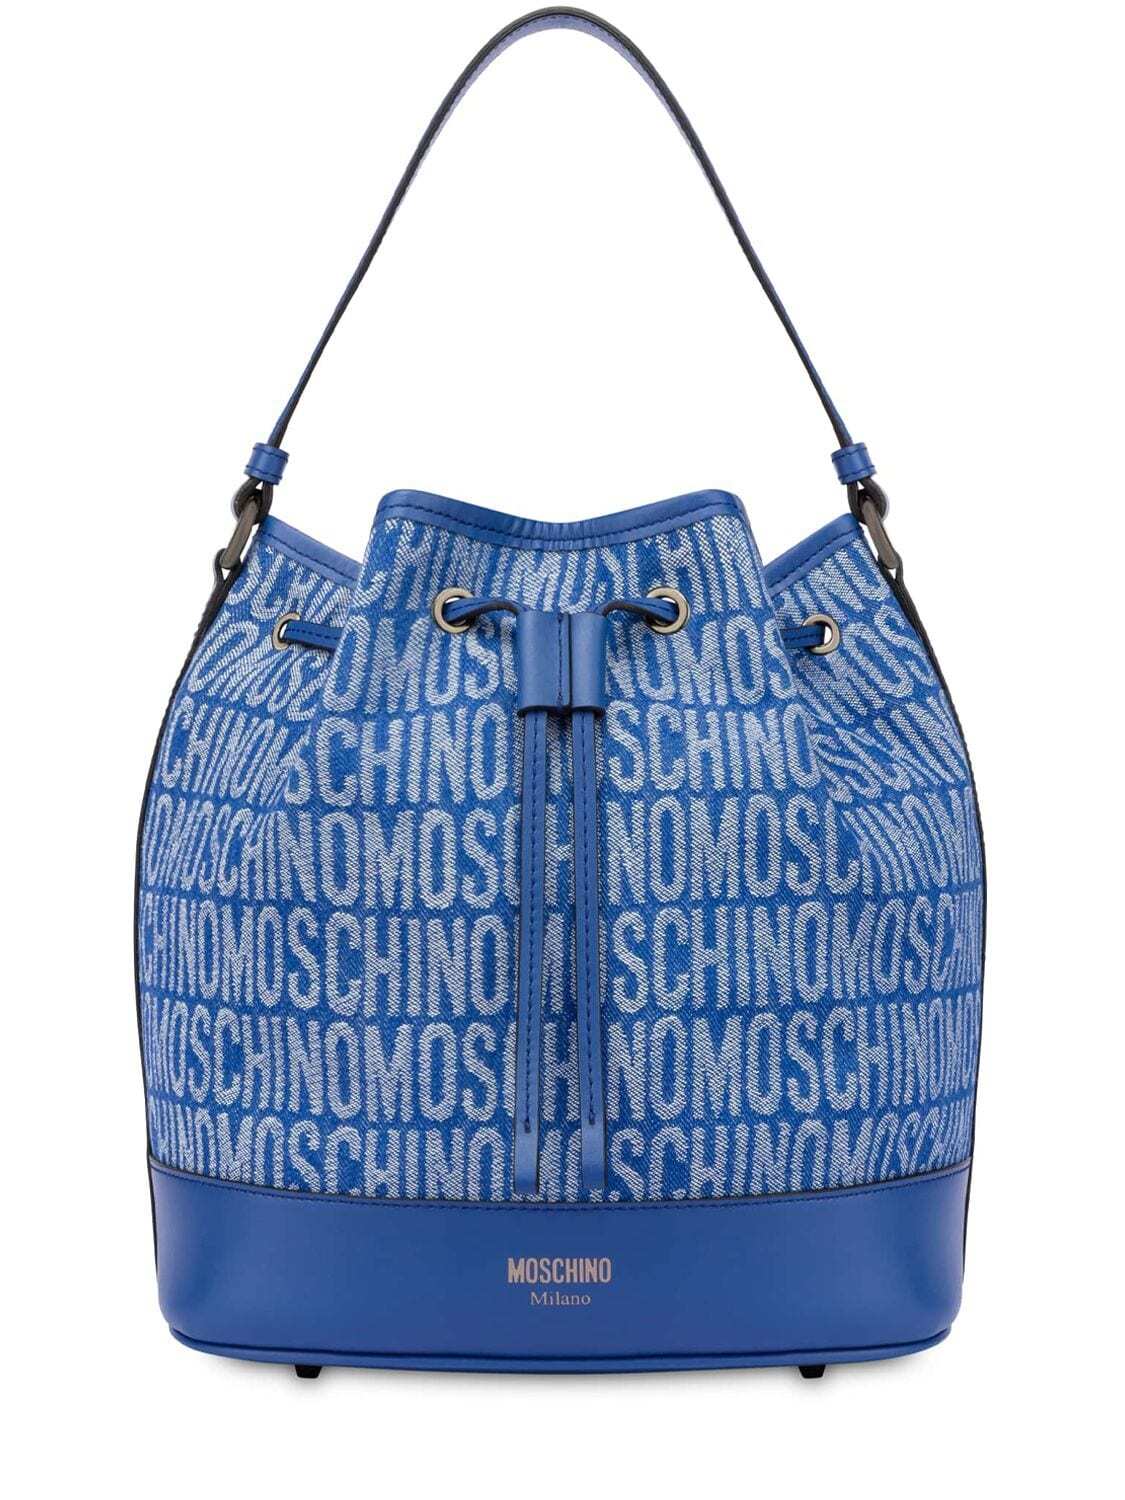 MOSCHINO Monogram Jacquard Nylon Bucket Bag in blue